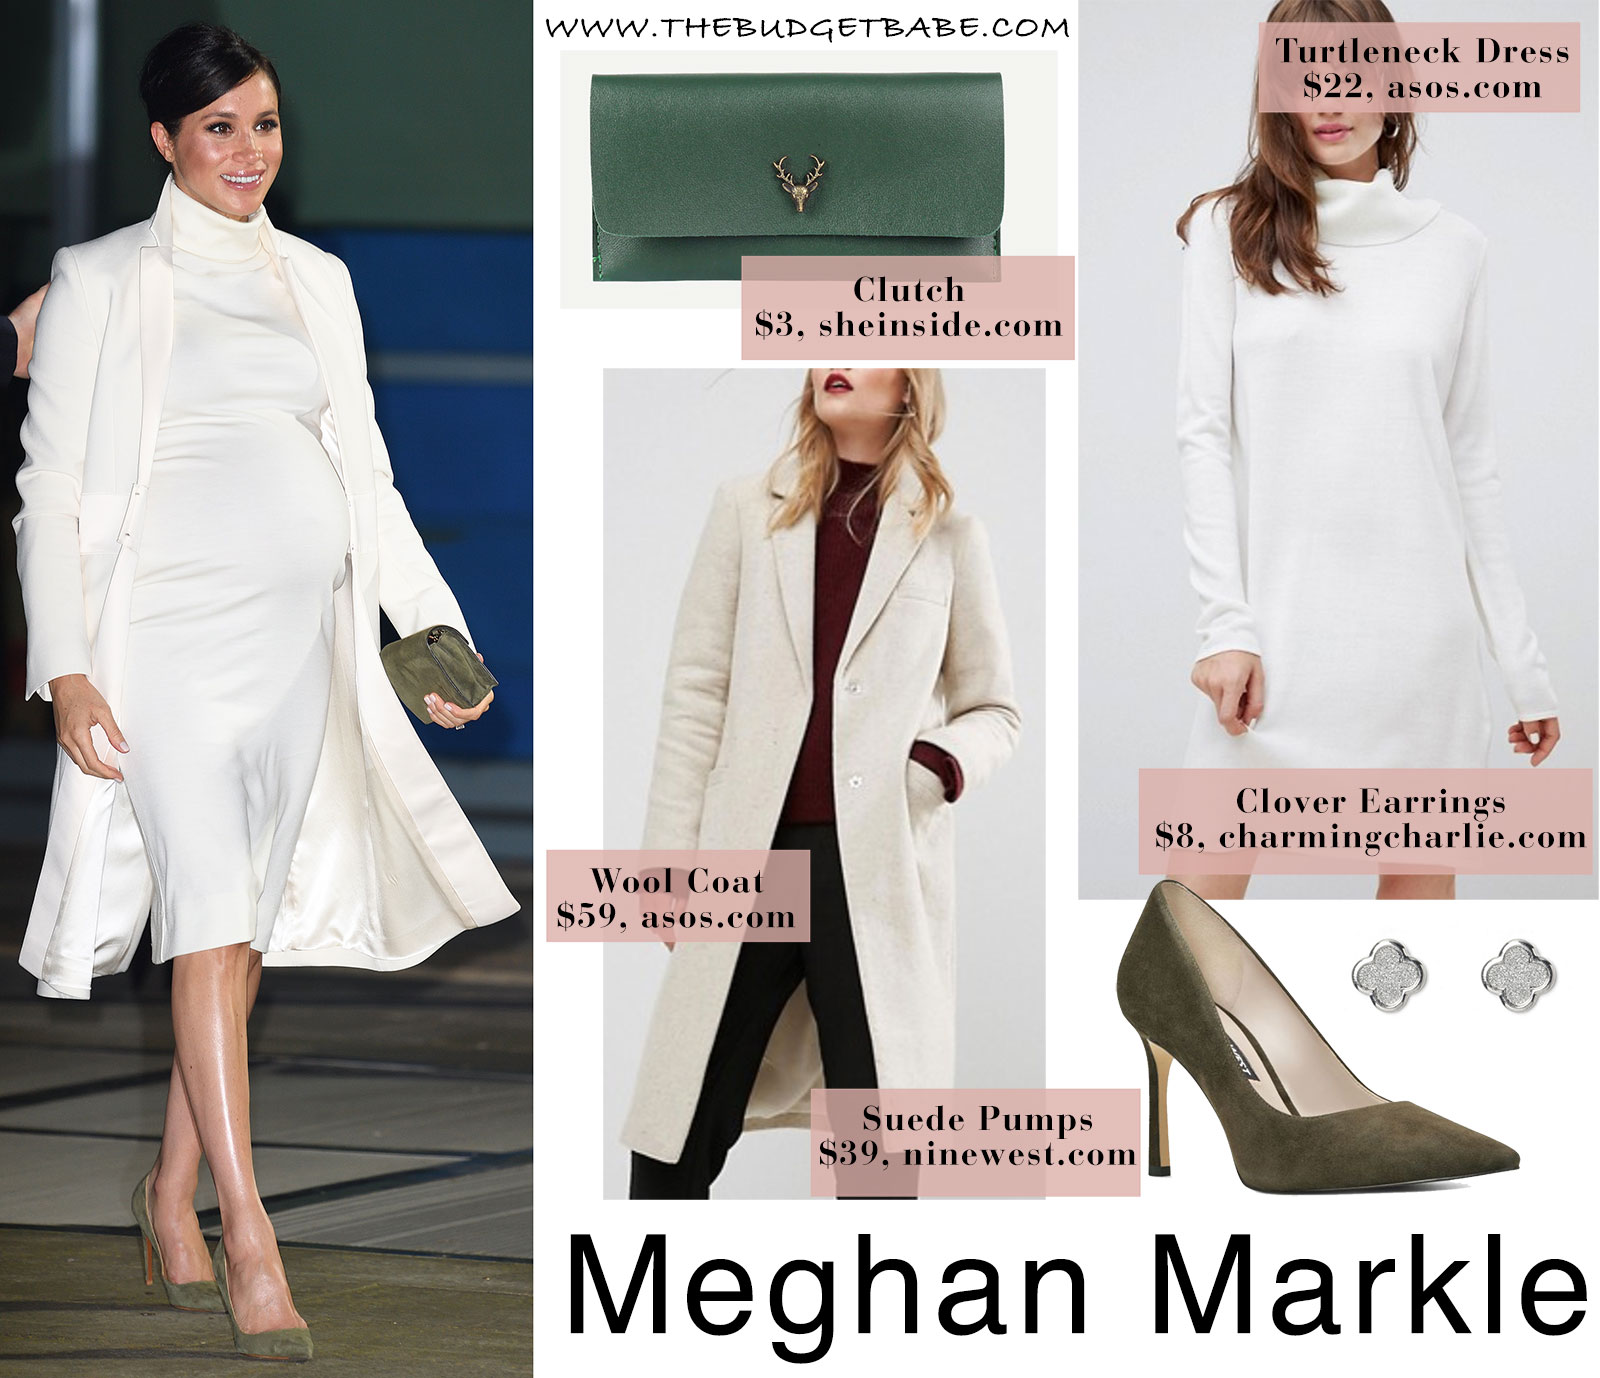 Meghan Markle's white turtleneck dress and matching coat